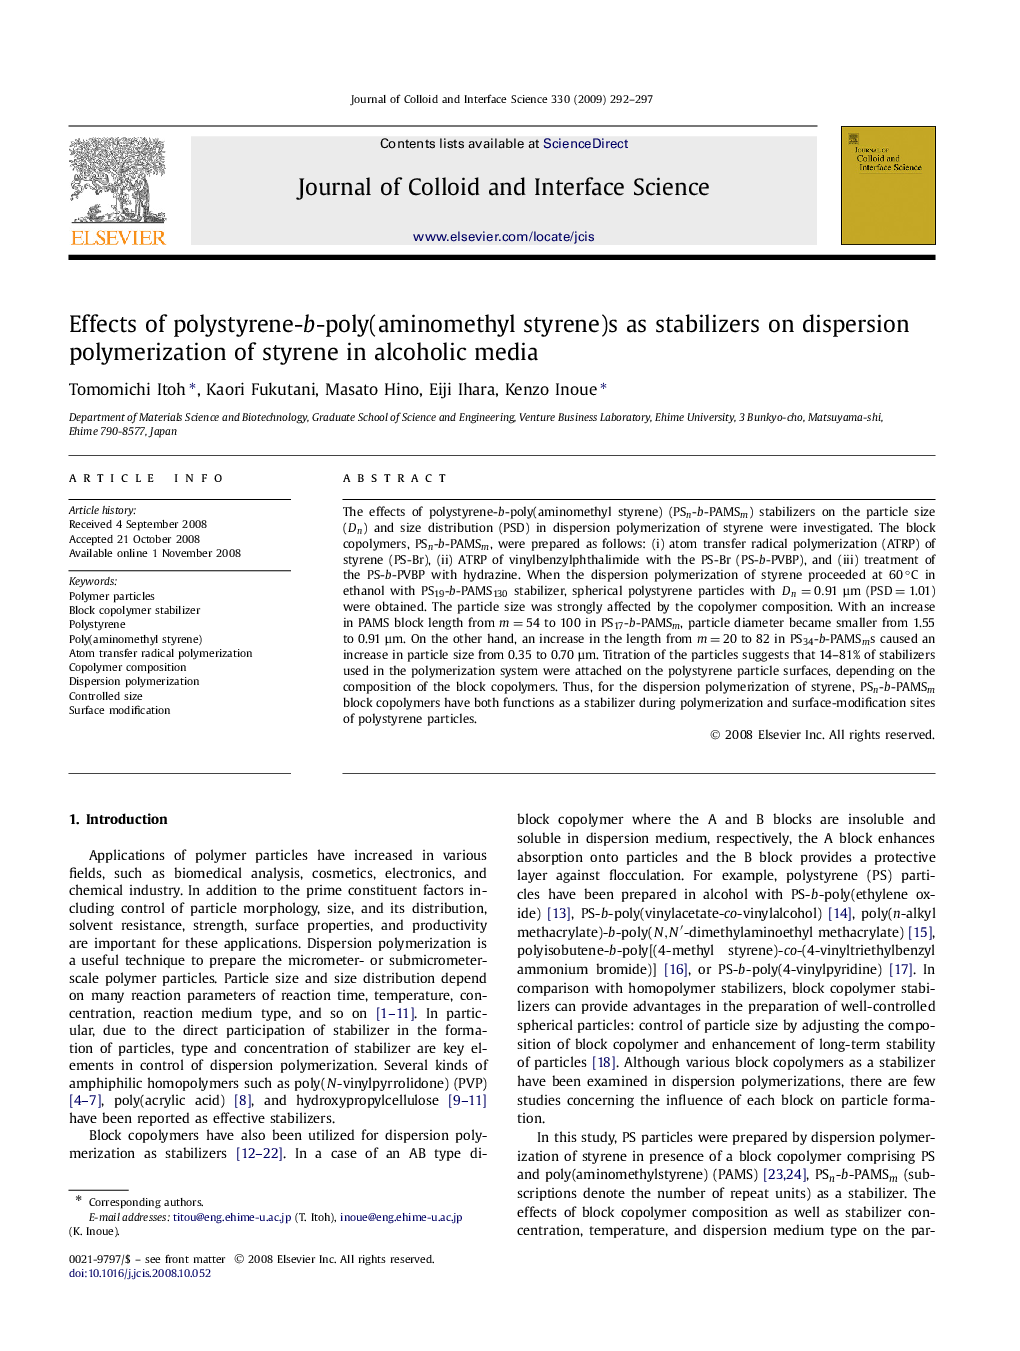 Effects of polystyrene-b-poly(aminomethyl styrene)s as stabilizers on dispersion polymerization of styrene in alcoholic media